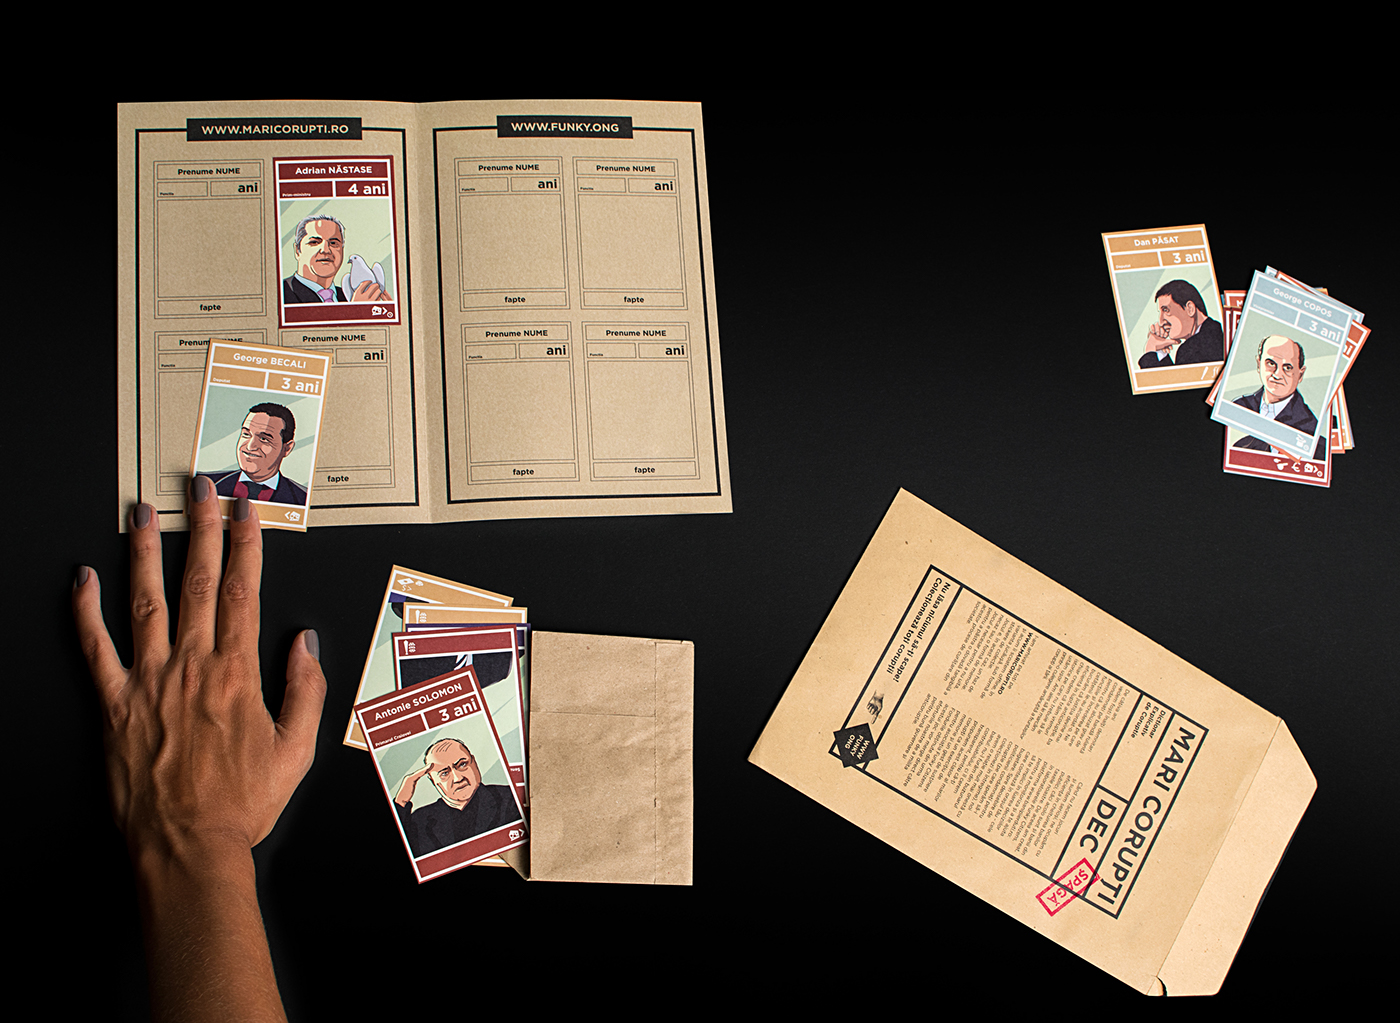 corruption revolution game cards cardgame collectibles portraits gta Government Jail villain cartoon Hero sticker